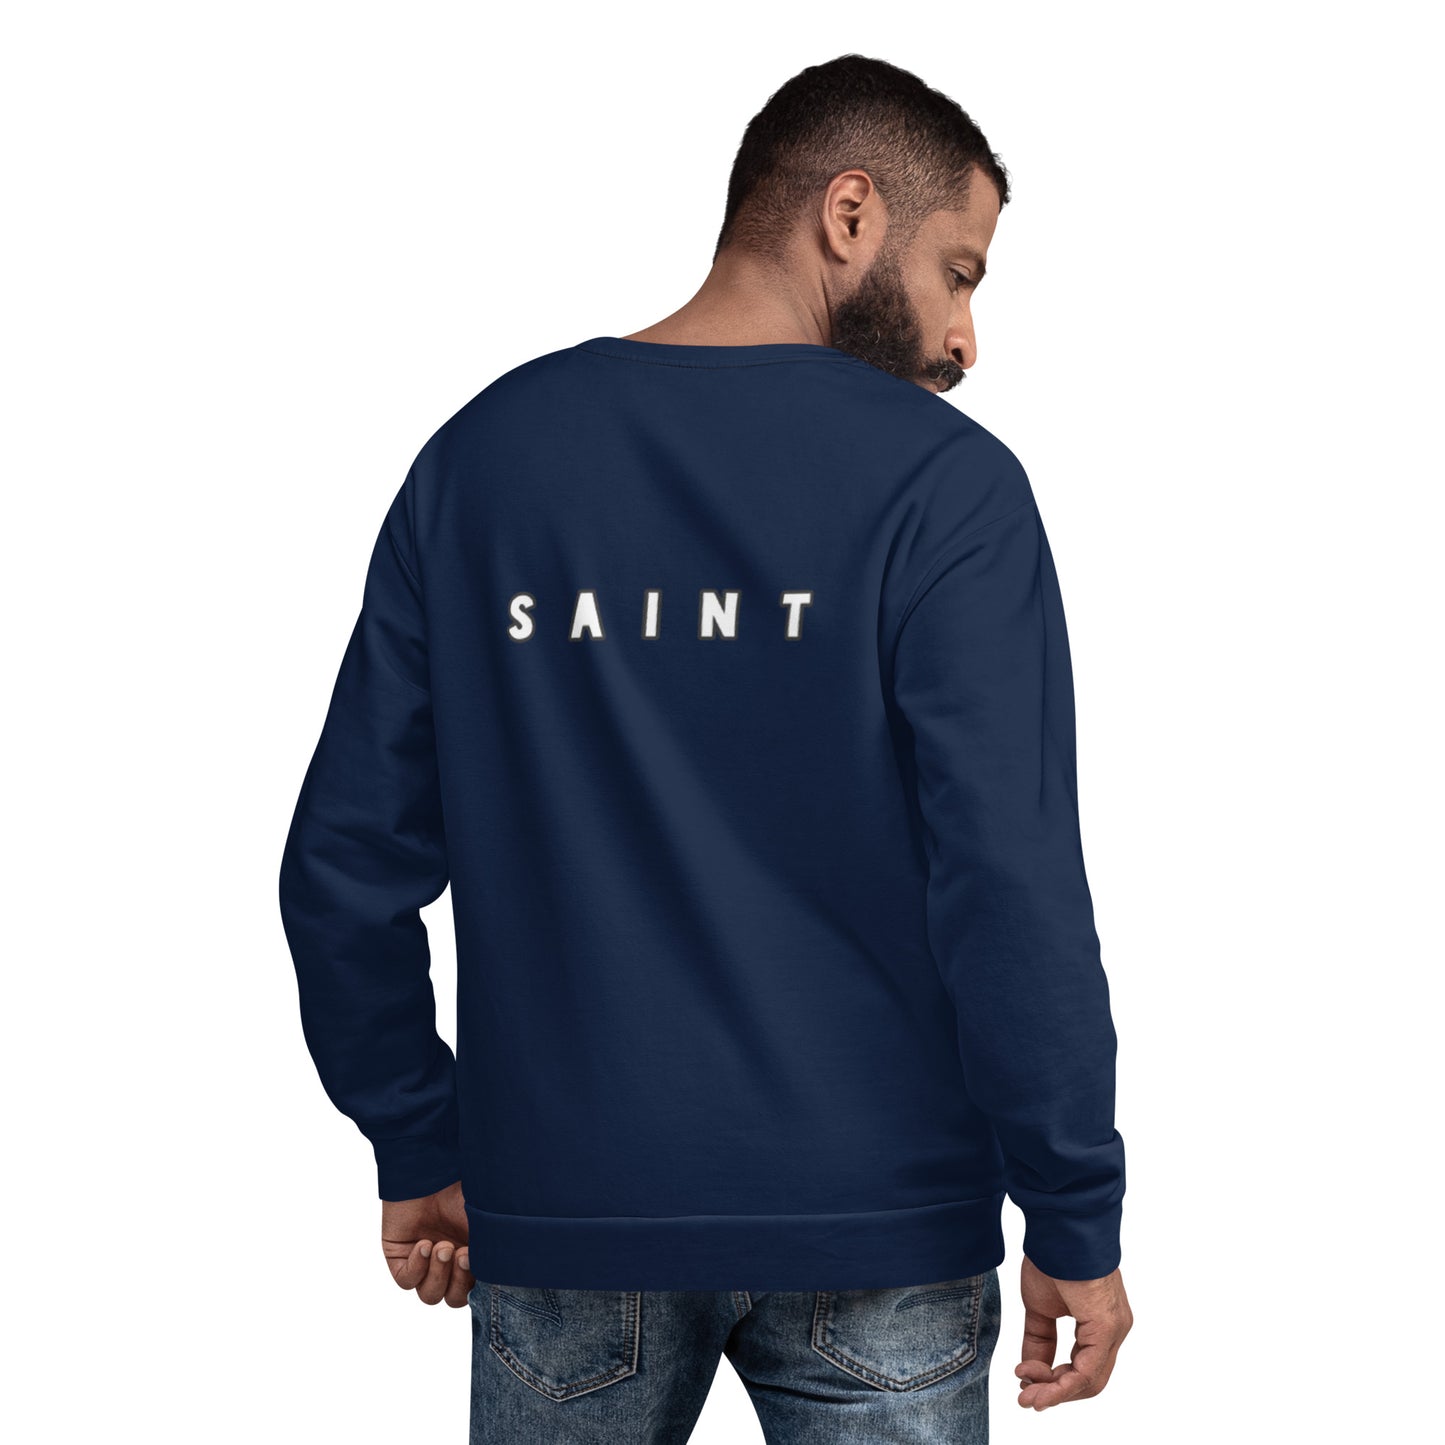 Donker blauwe sweater met witte letters op de achterkant.